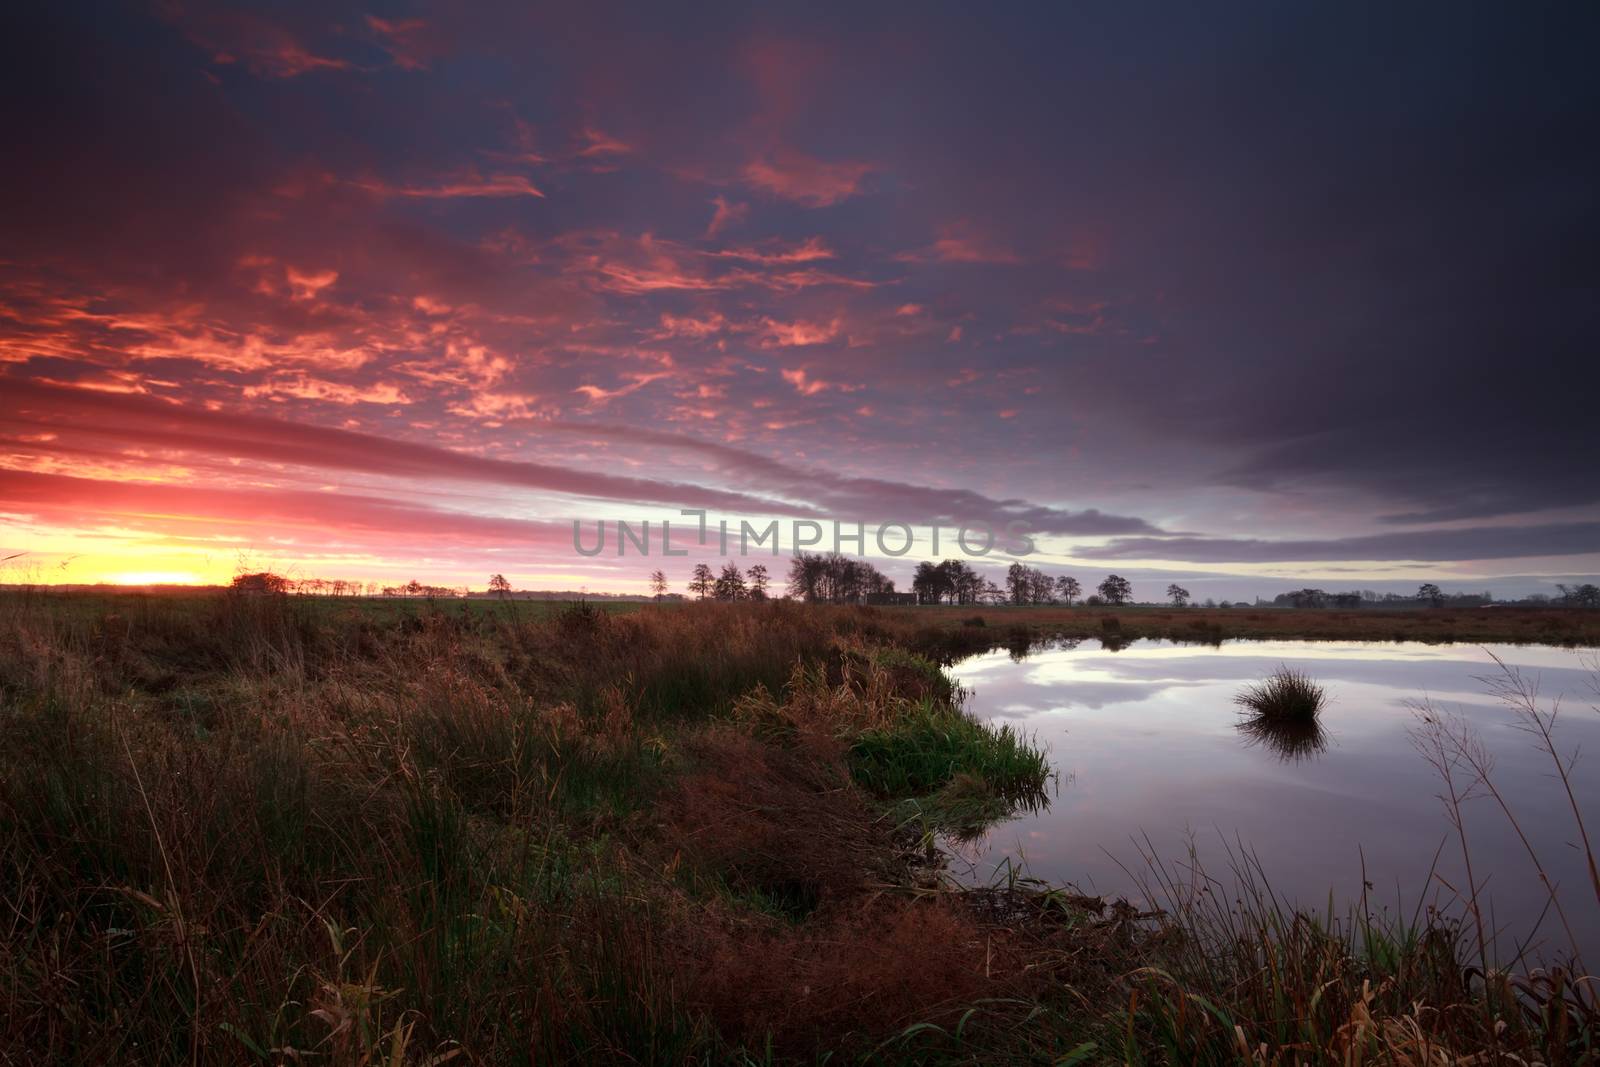 dramatic purple sunrise over river, Drenthe, Netherlands